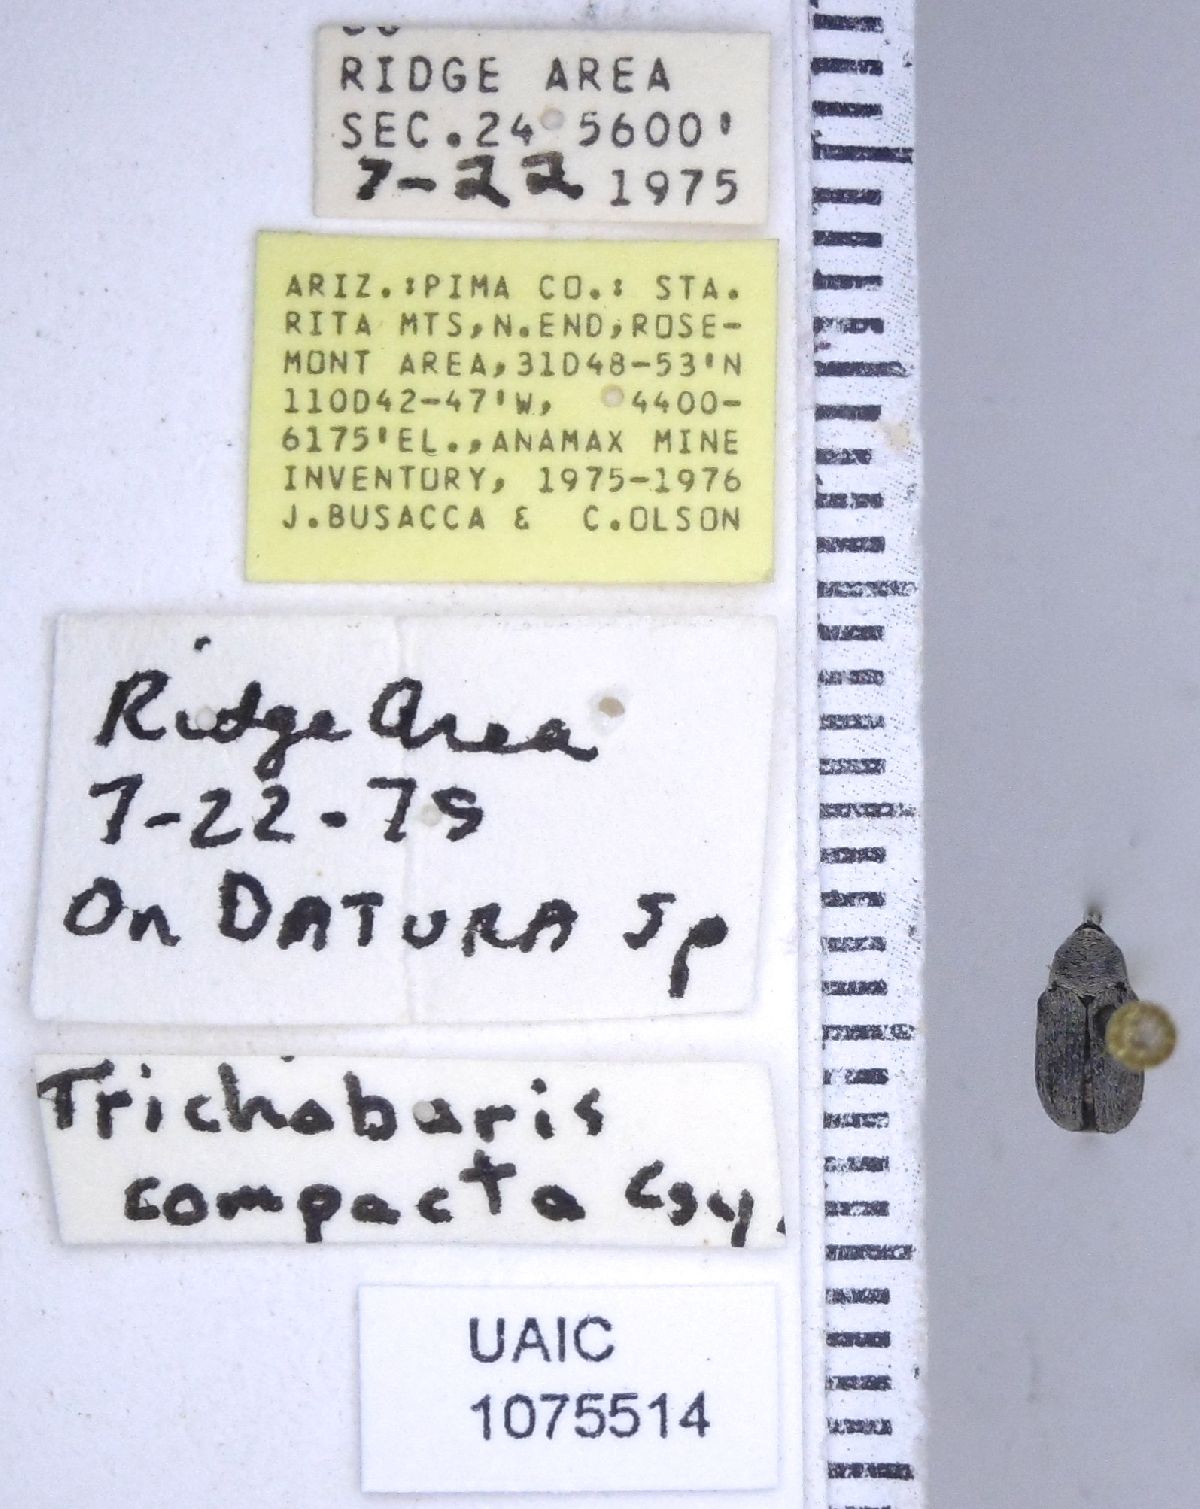 Trichobaris image